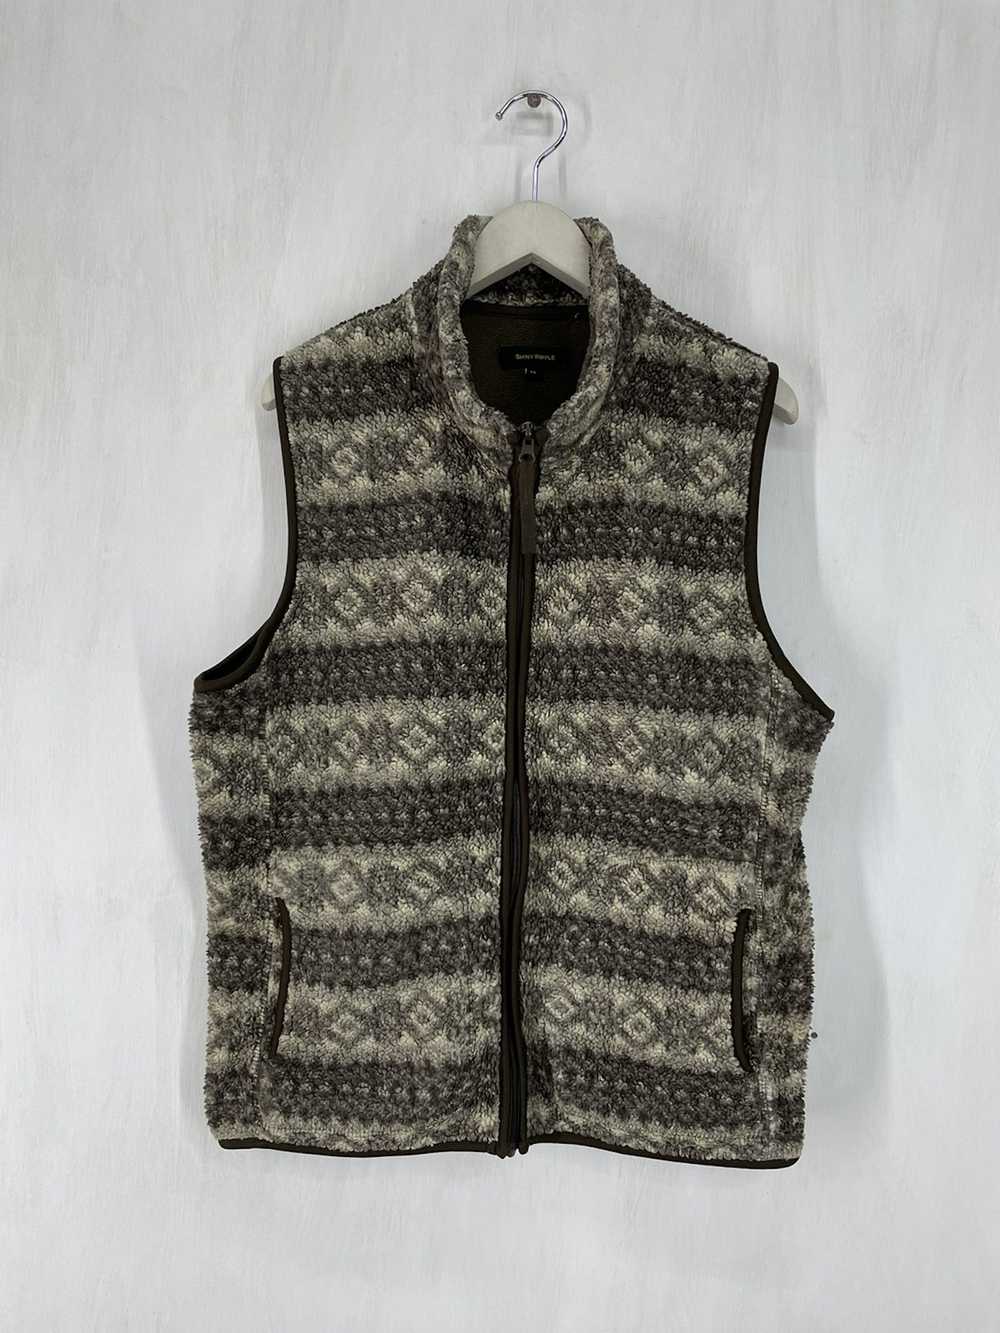 Japanese Brand Shiny Ripple fleece vest - image 1